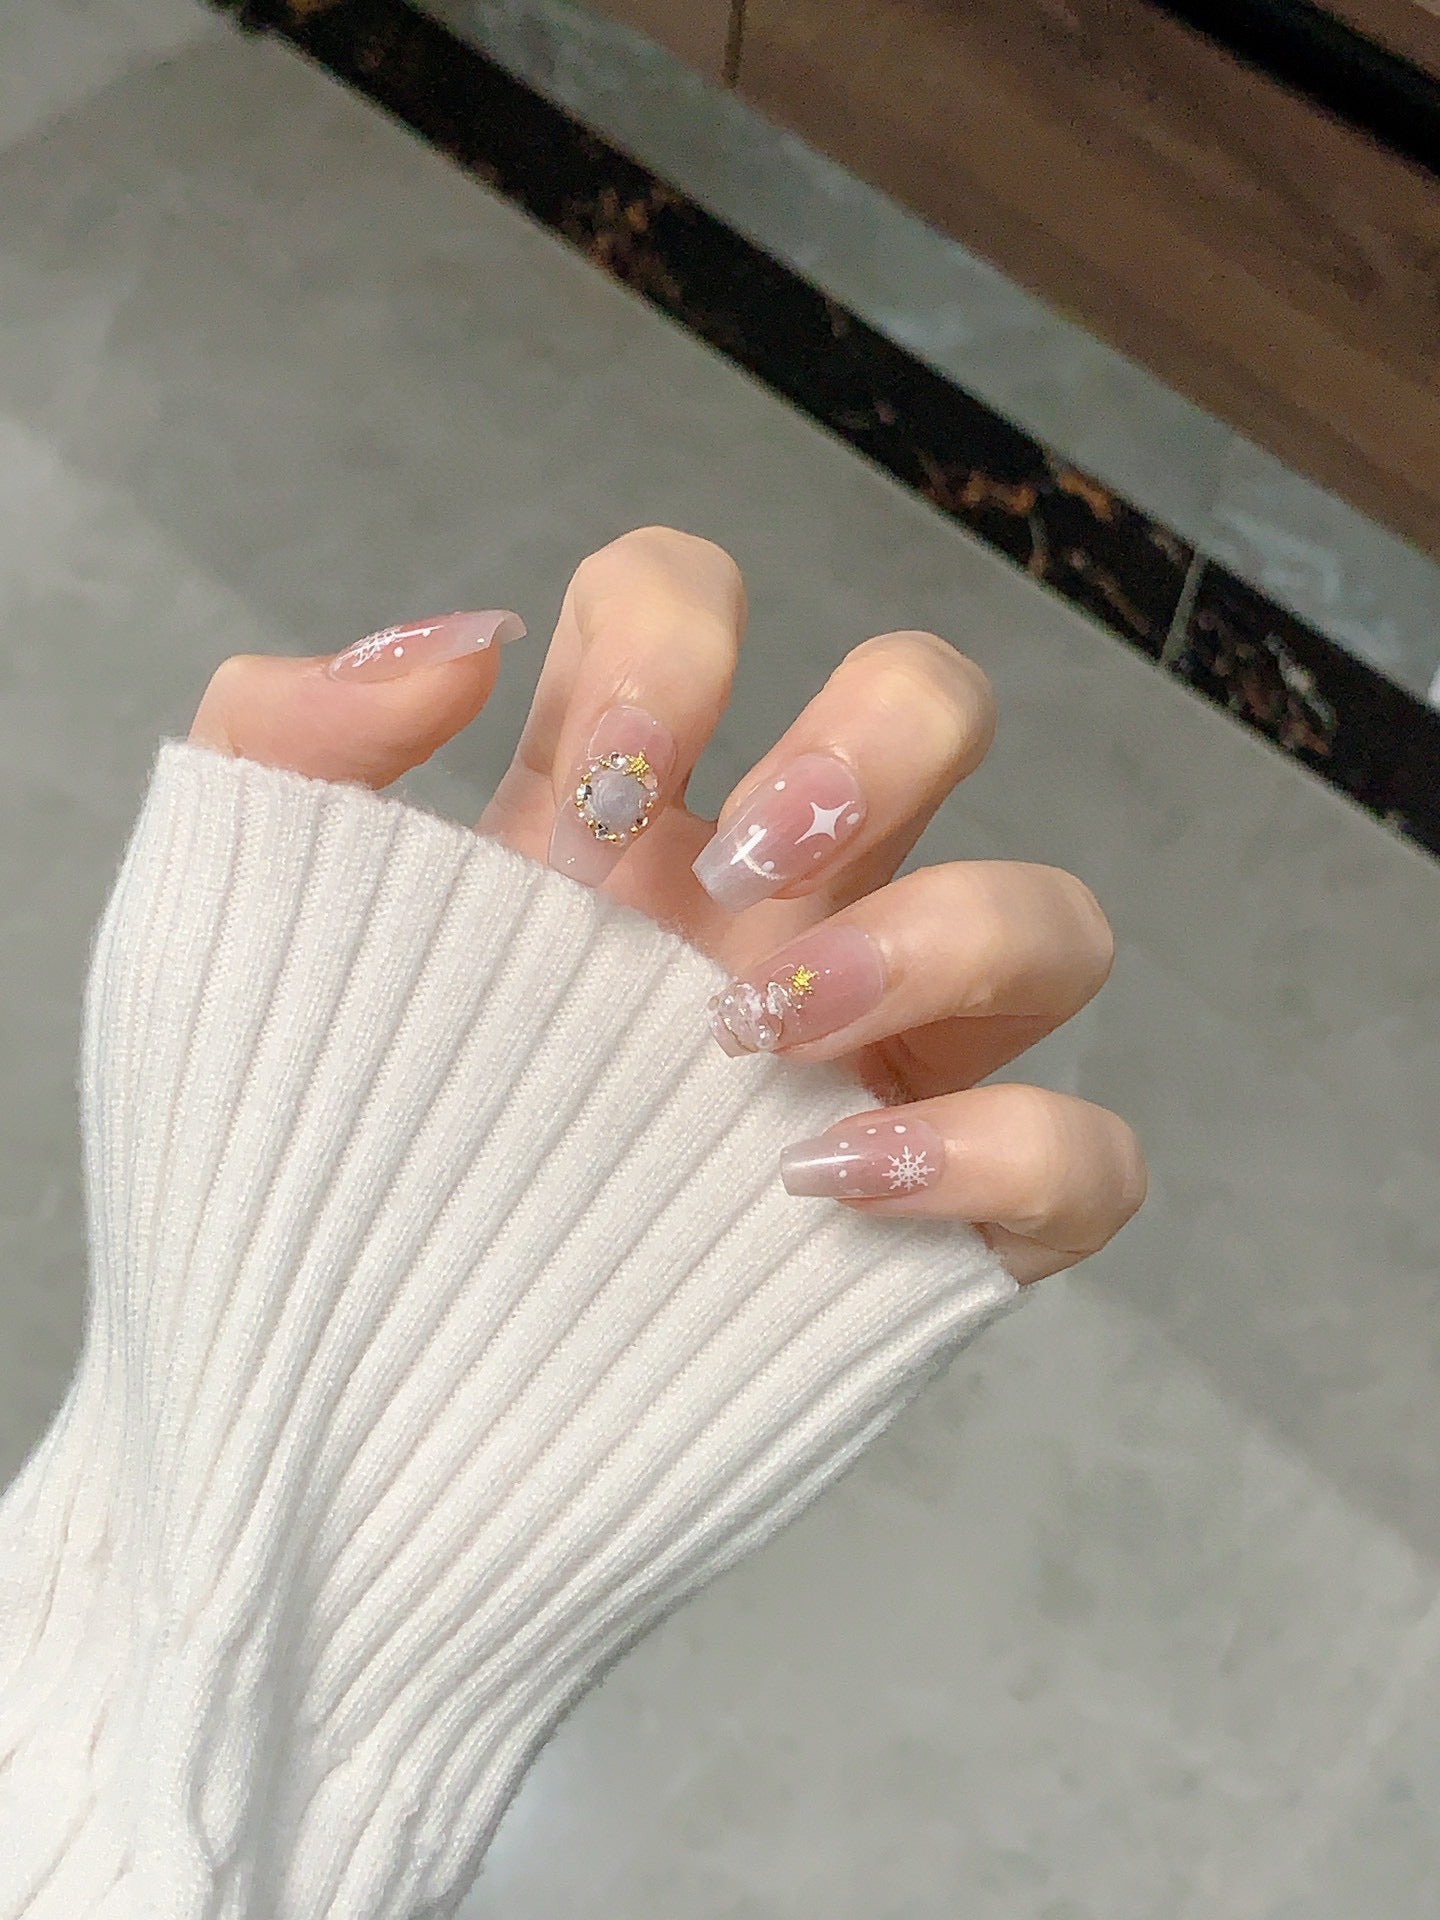 Reusable Snow Inspired | Premium Press on Nails | Fake Nails | Cute Fun Colorful Colorful Gel Nail Artist faux nails